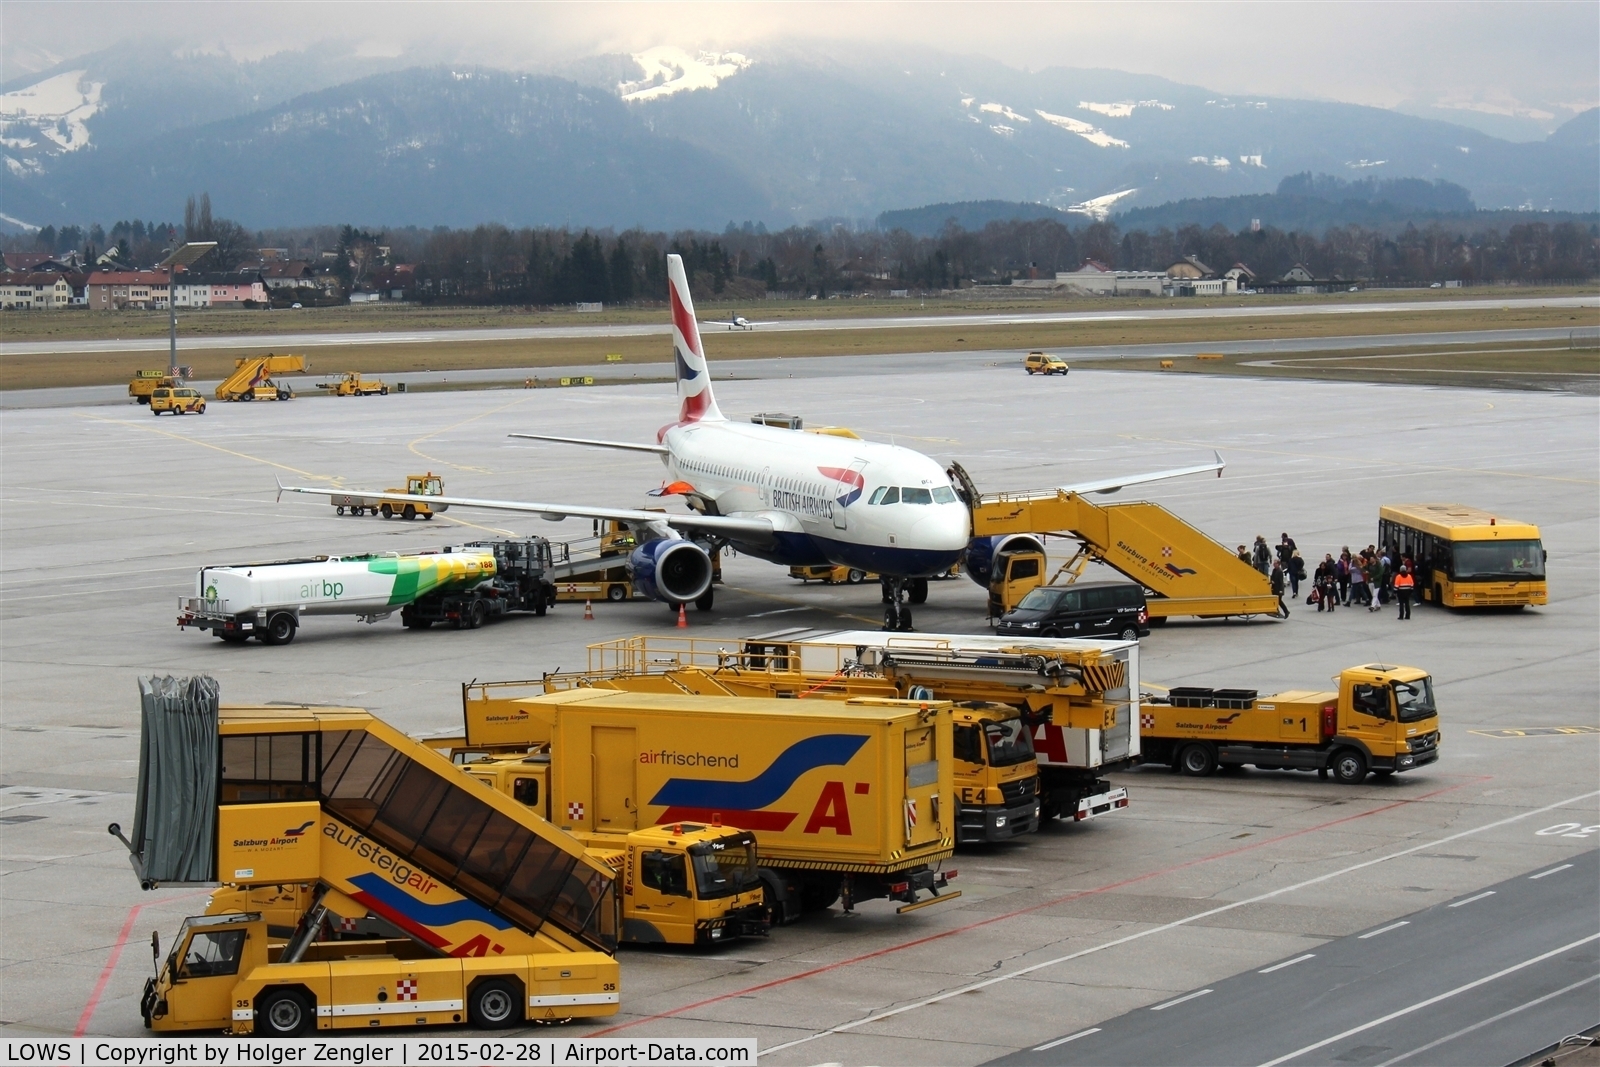 Salzburg Airport, Salzburg Austria (LOWS) - Apron overview....